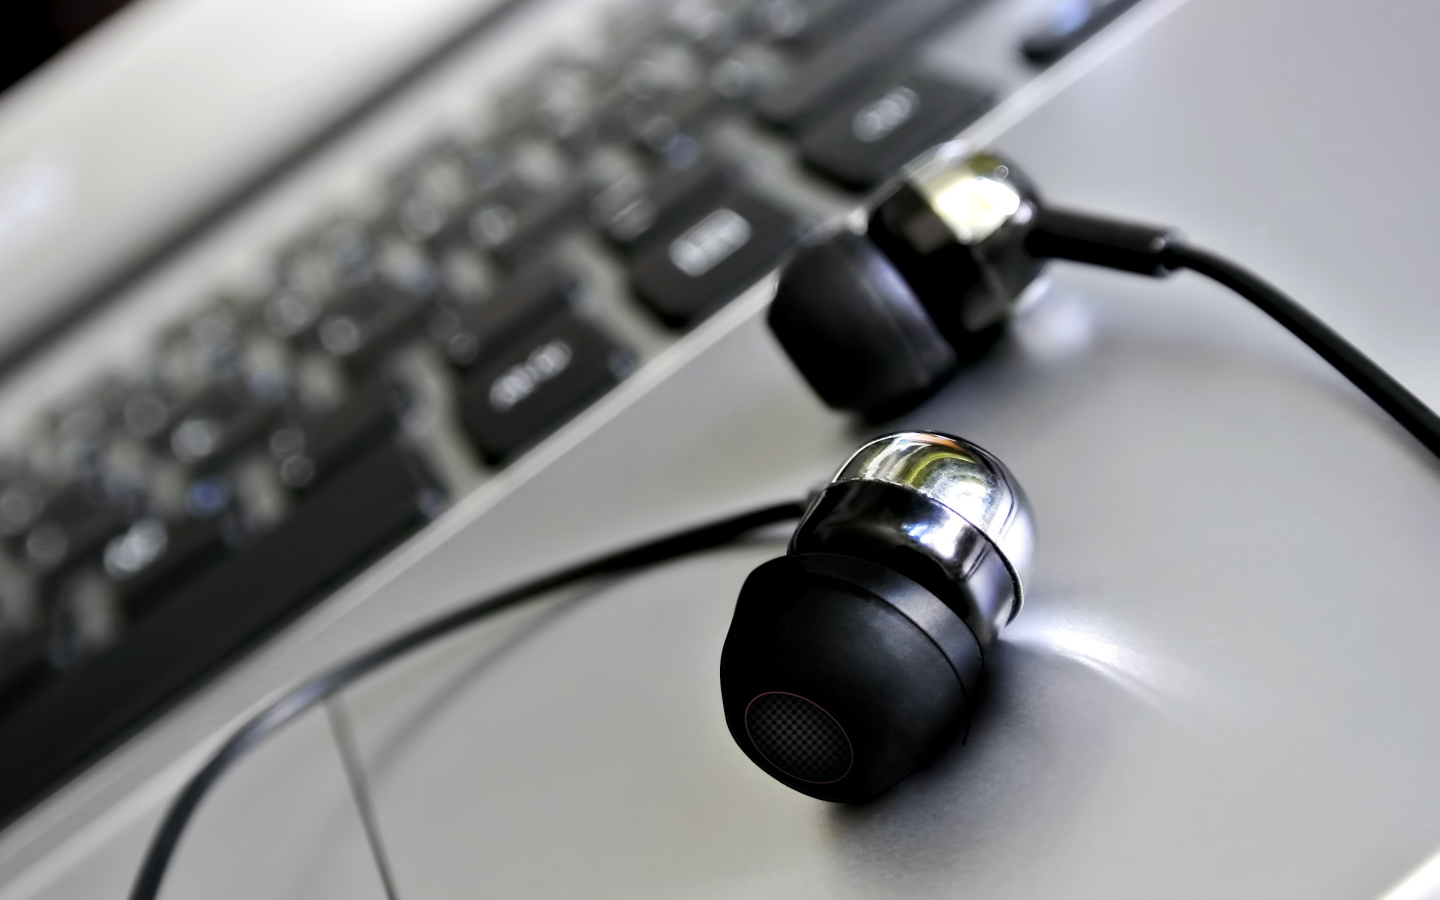 Headphones lie near the keyboard close-up